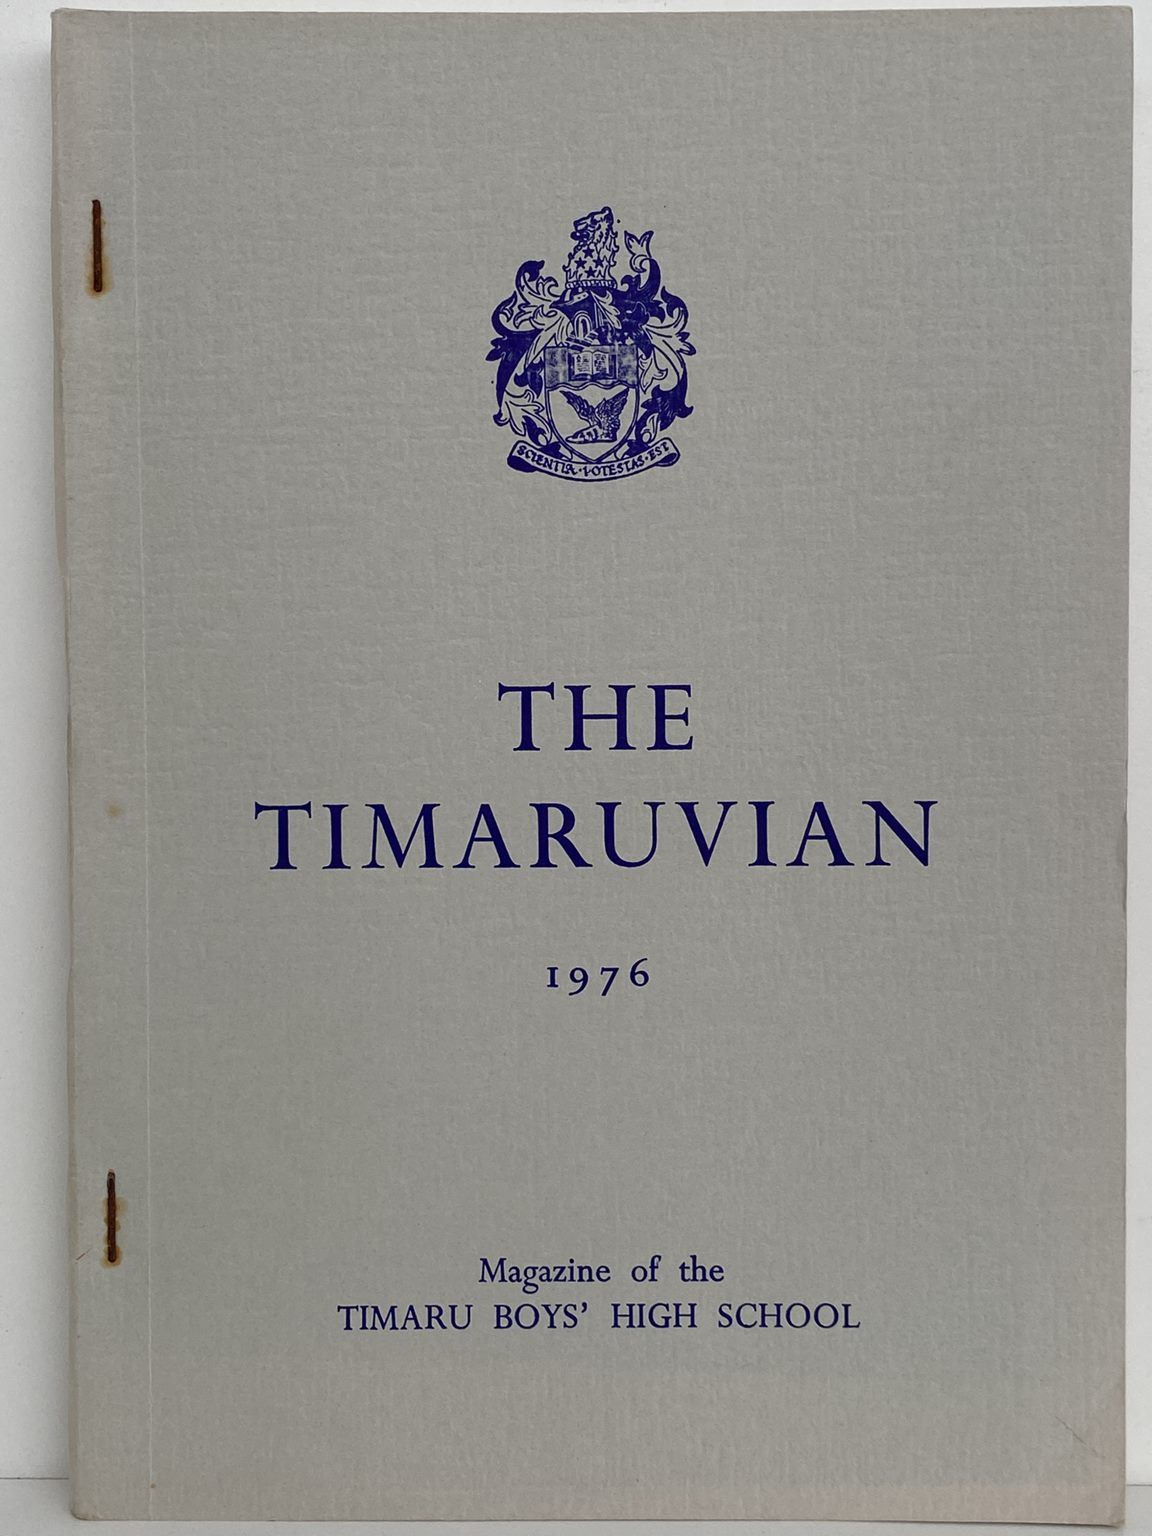 THE TIMARUVIAN: Magazine of the Timaru Boys' High School 1976